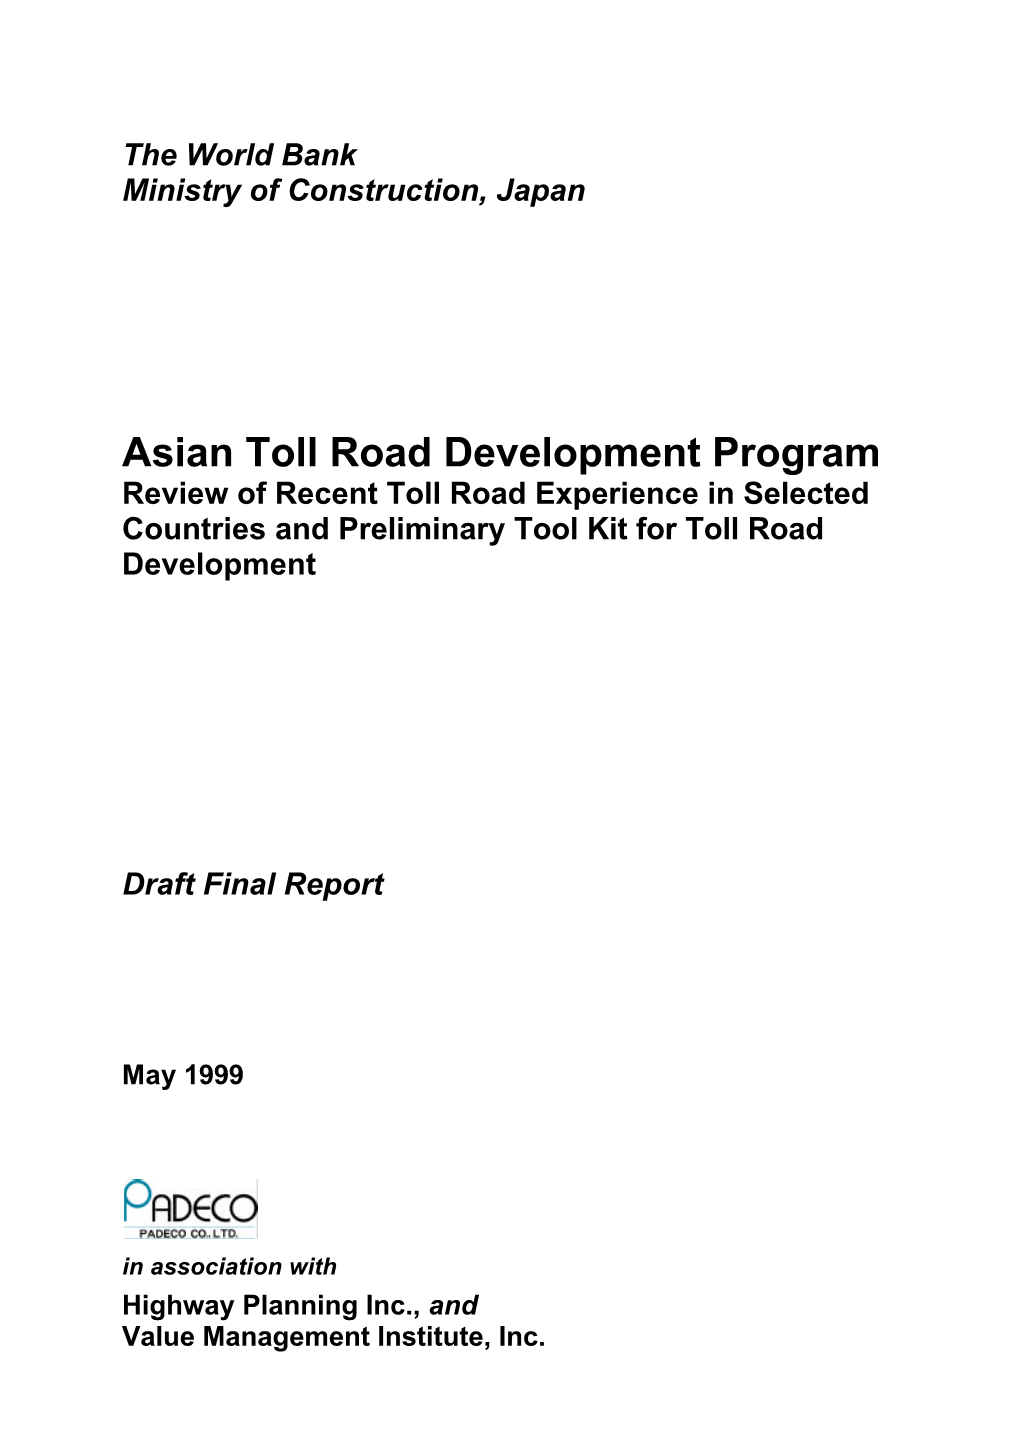 Asian Toll Road Development Program (1999)